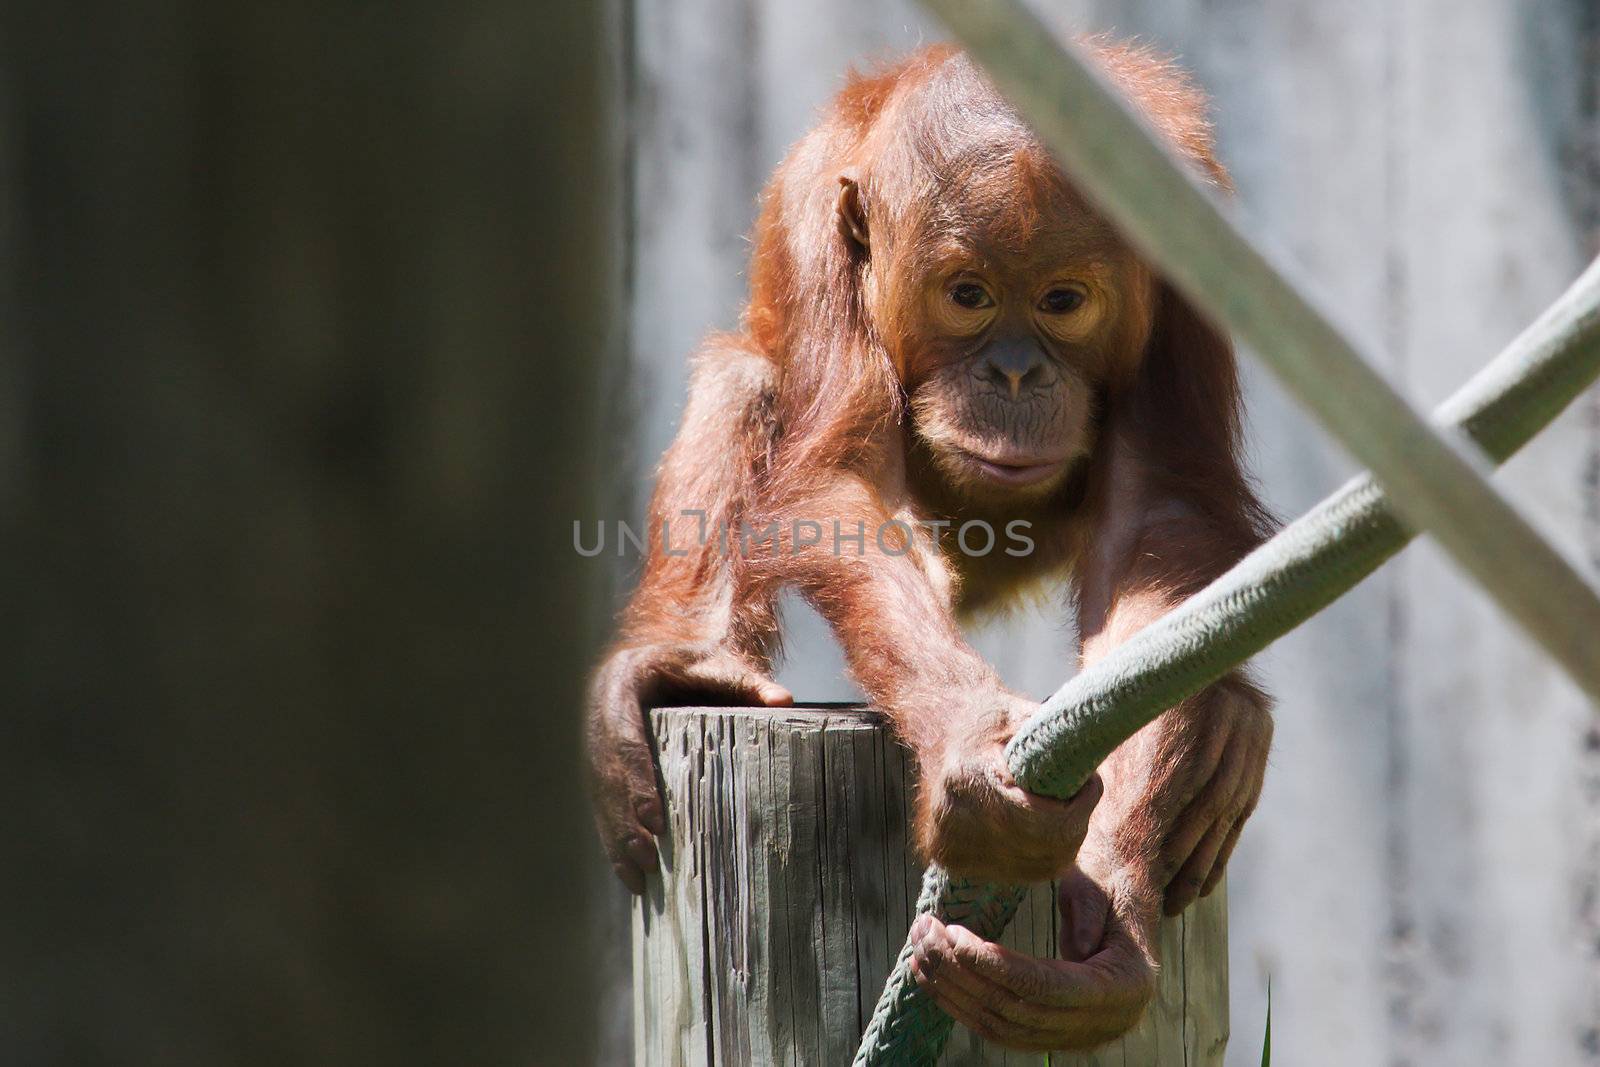 cute baby orangutan playing and Climbing outside.